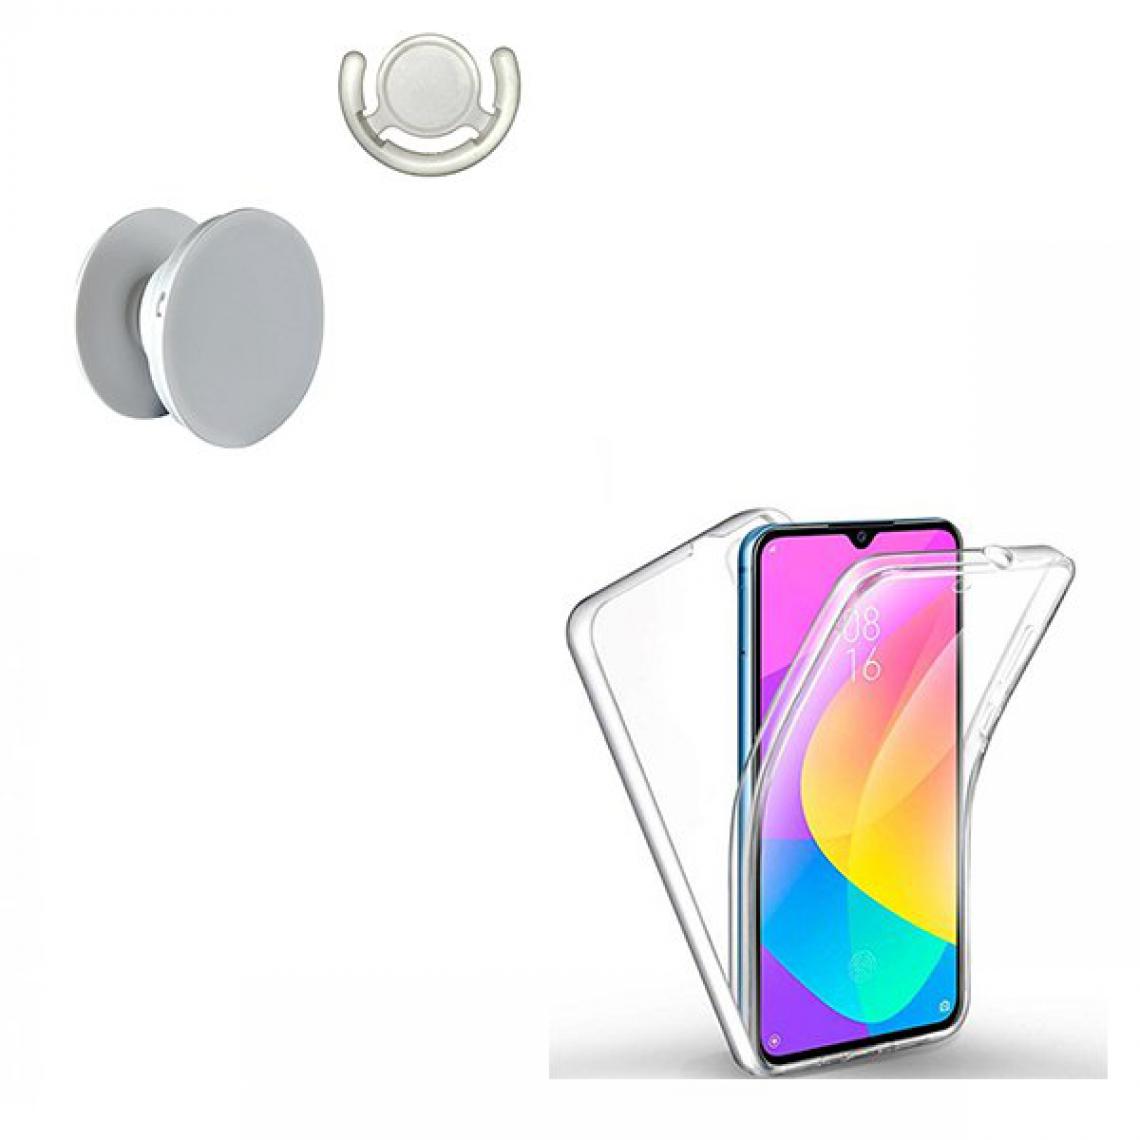 Phonecare - Kit Coque 3x1 360° Impact Protection + 1 PopSocket + 1 Support PopSocket Blanc - Impact Protection - Xiaomi Mi A3 - Coque, étui smartphone